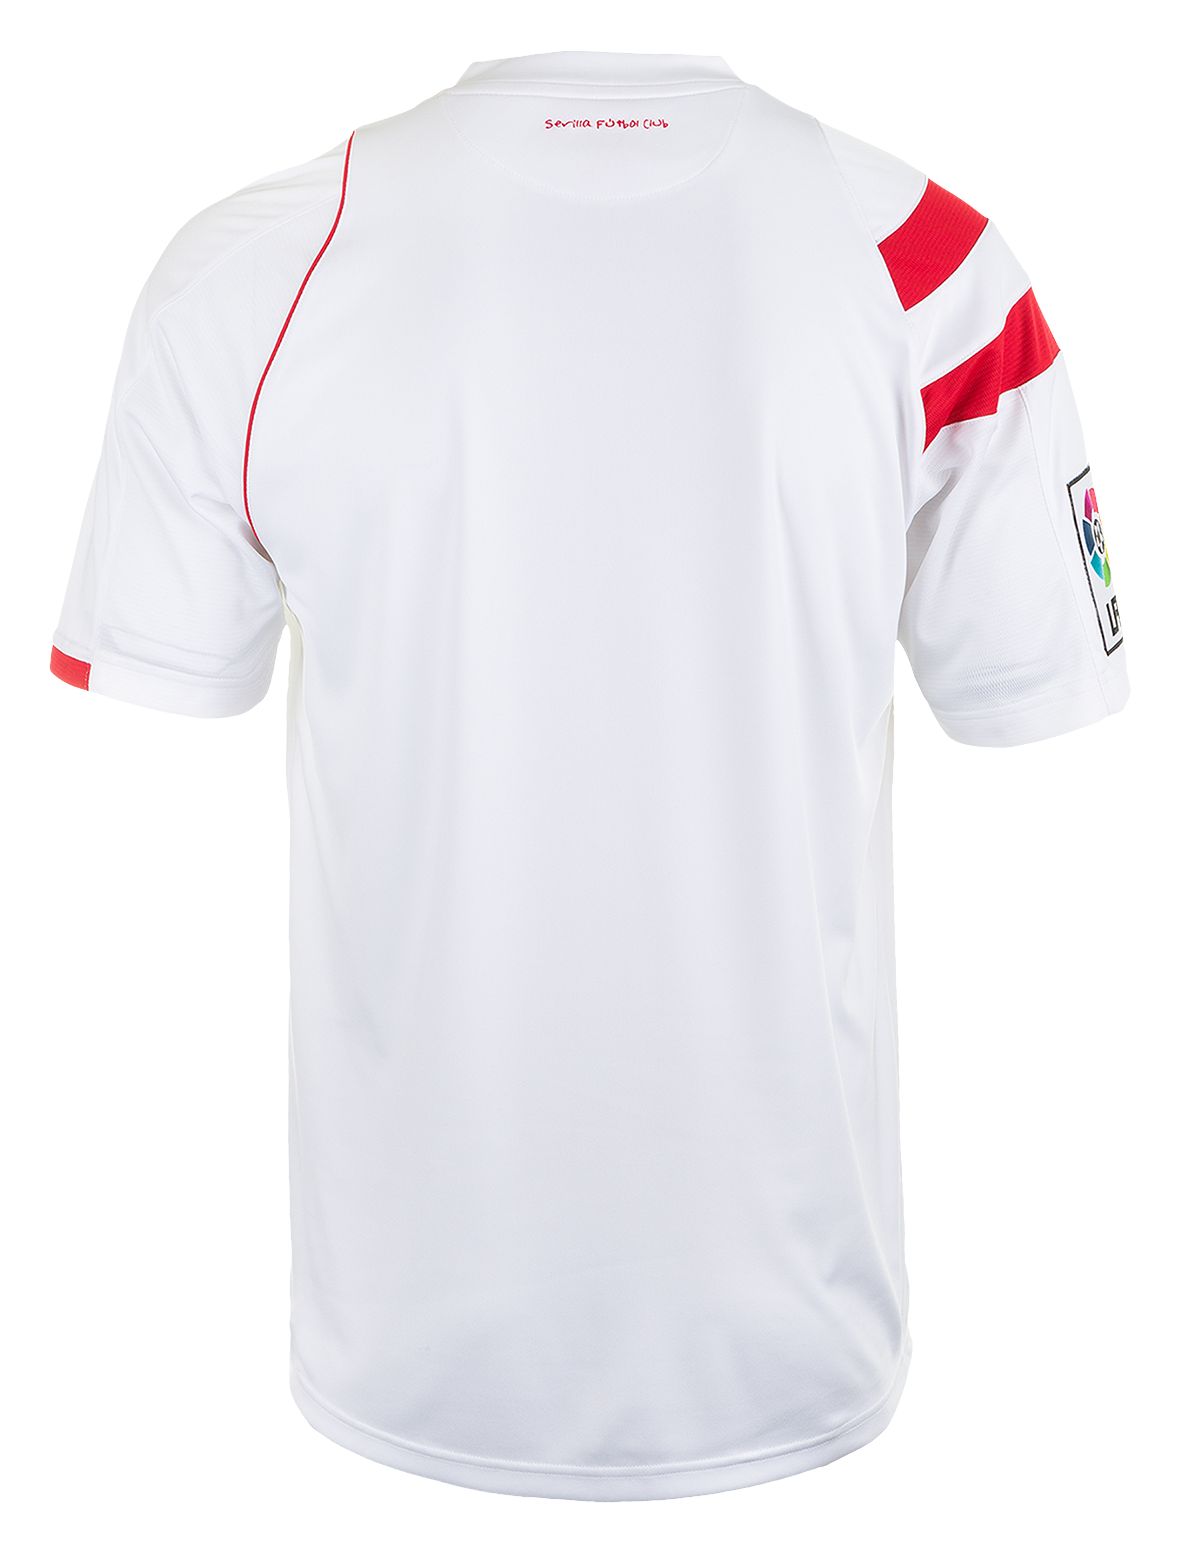 Sevilla Home Short Sleeve Jersey 2014/15, White image number 2